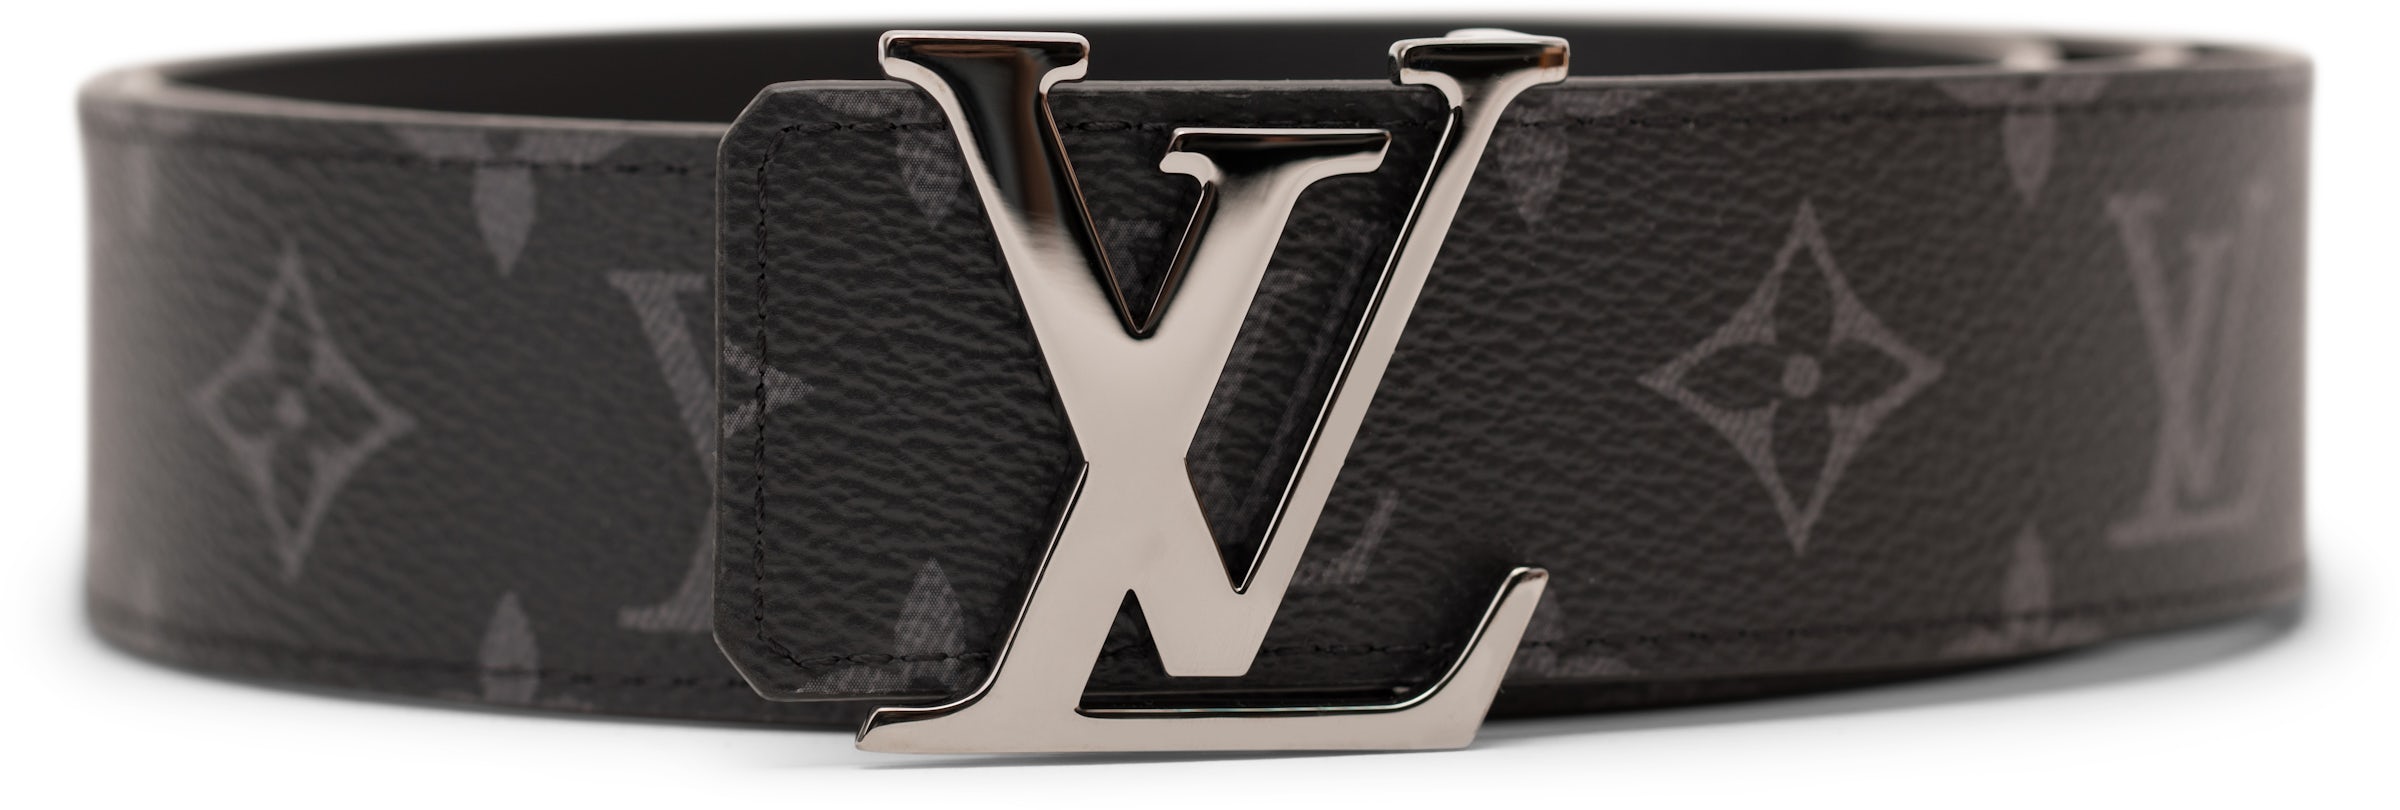 Leo zhou on X: Lv Chanel Gucci Nike charms for crocs   / X